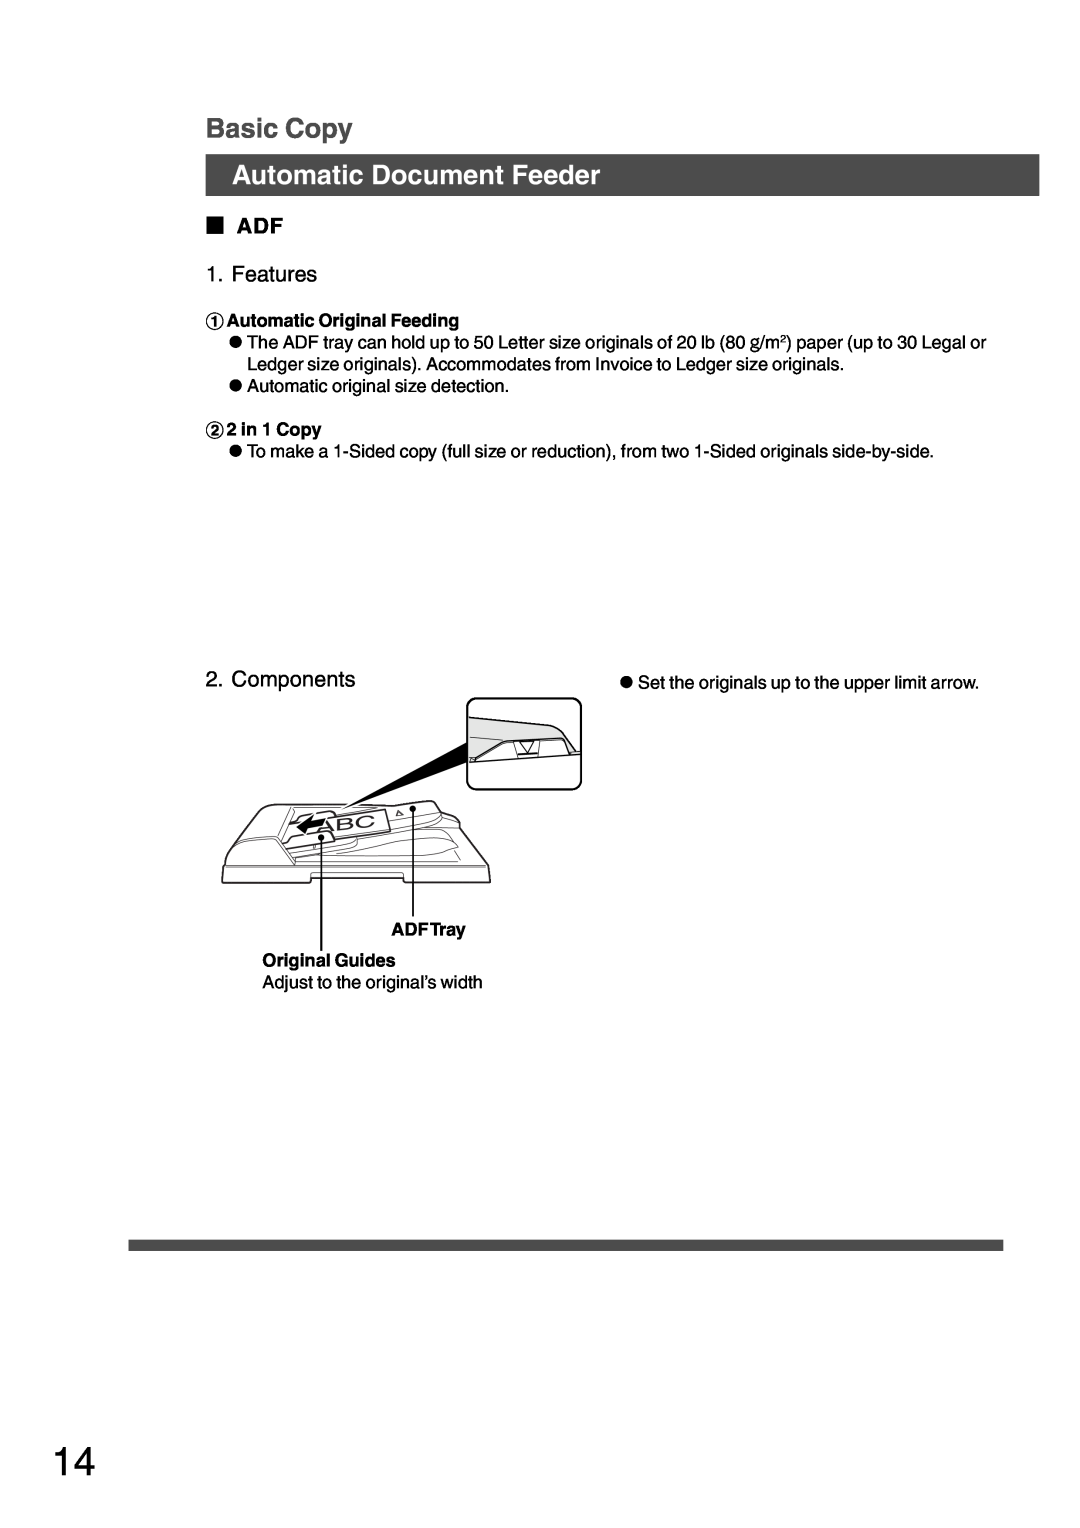 Panasonic DP-1810F manual Automatic Document Feeder, Basic Copy 